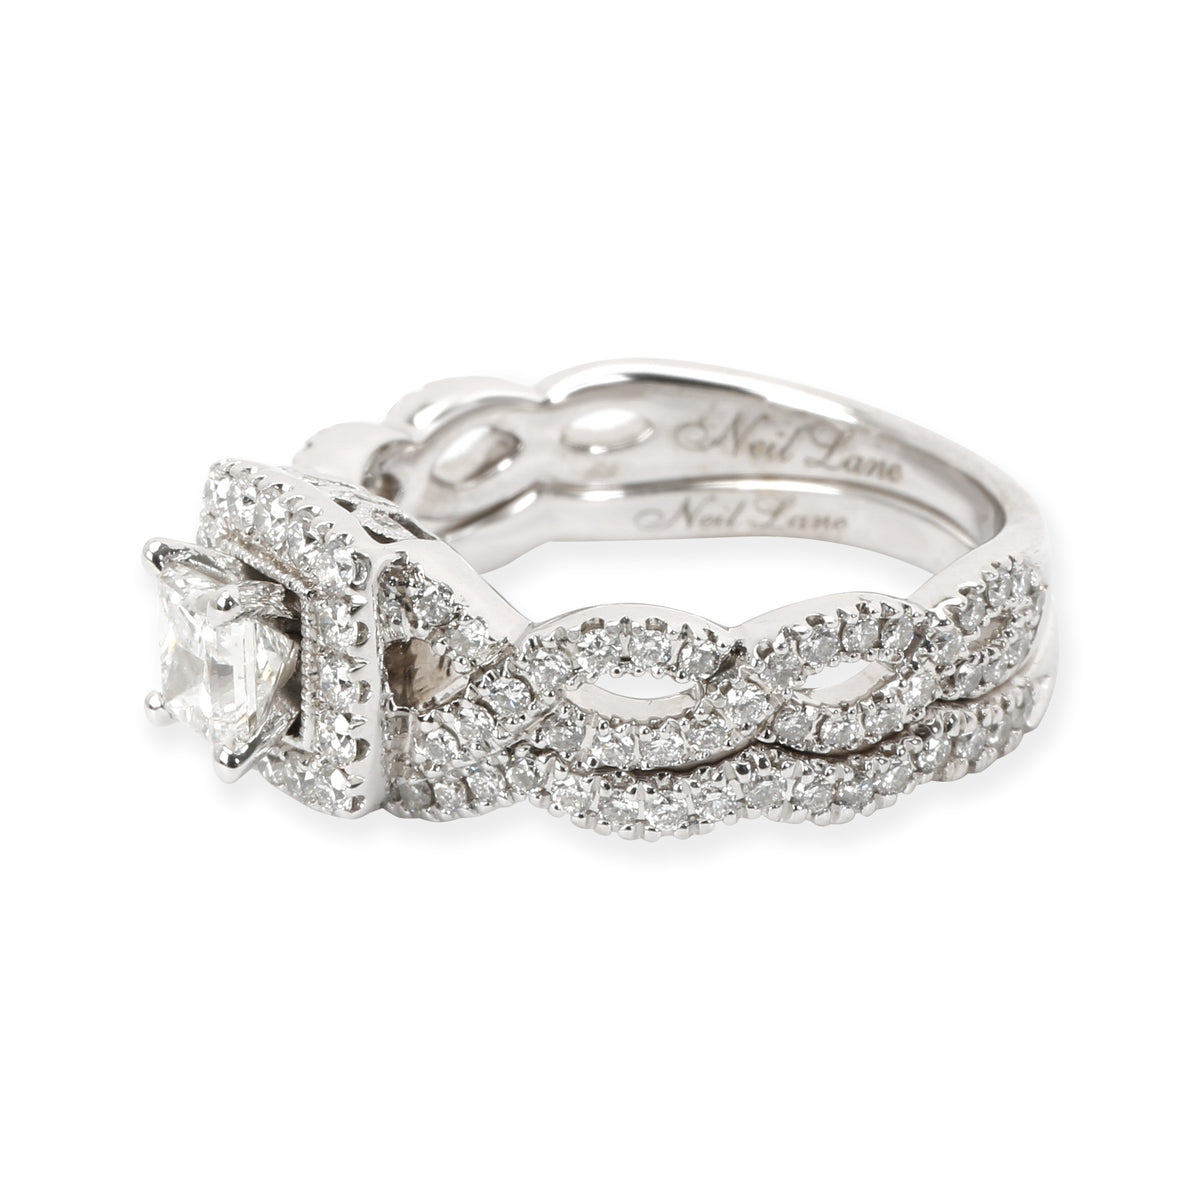 Neil Lane Diamond Engagement Wedding Ring Set in 14K White Gold (1.17 CTW)